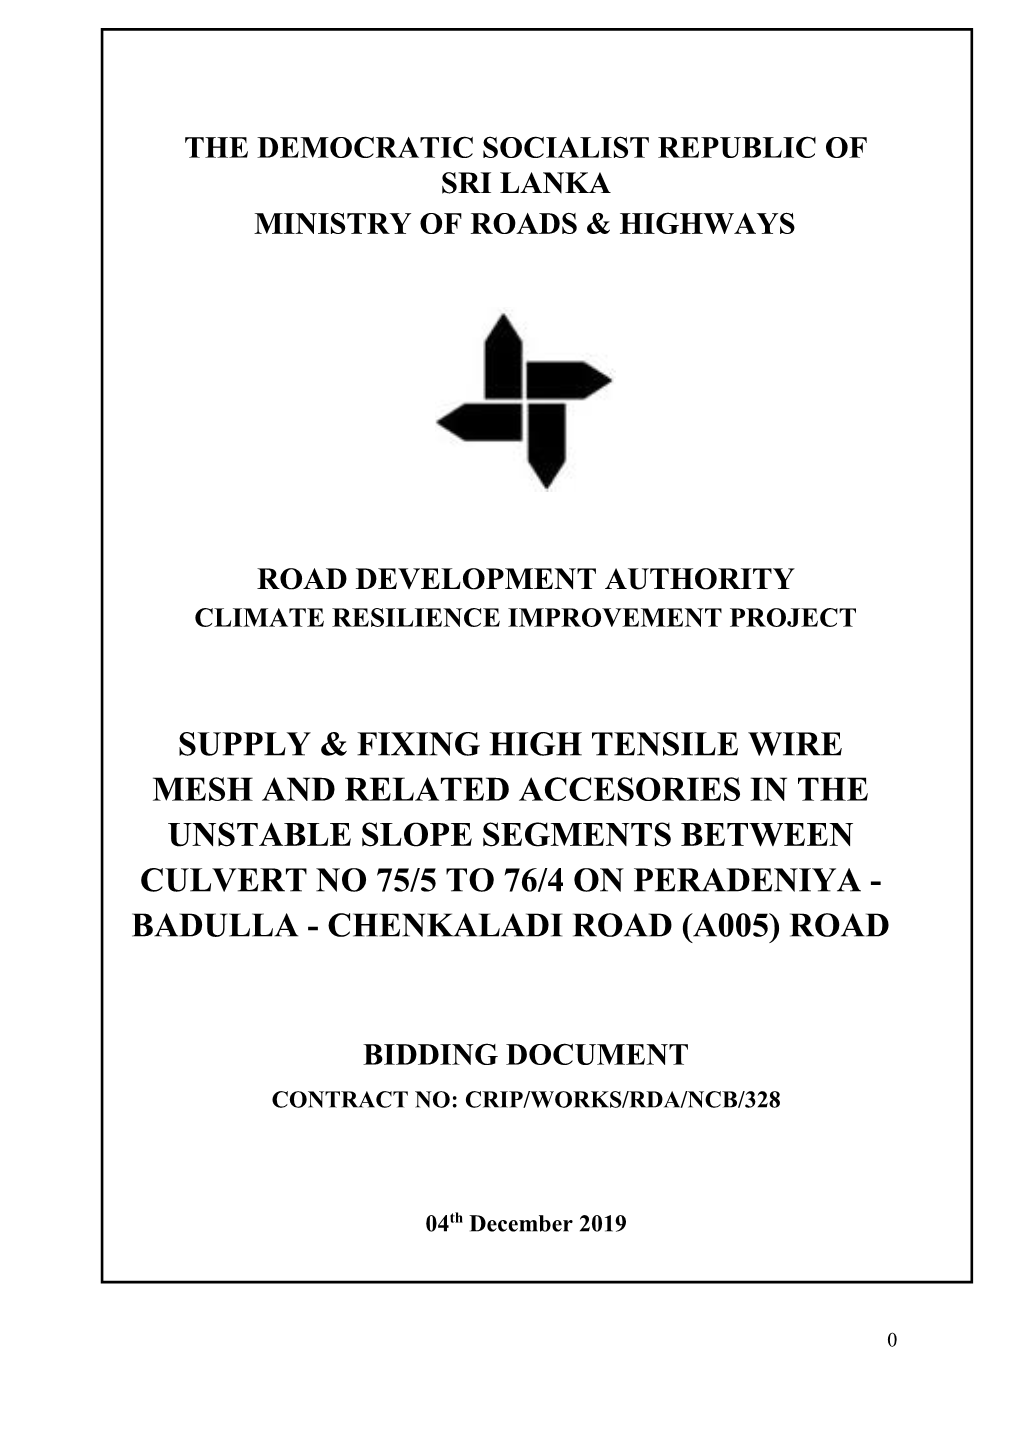 Bidding Document Contract No: Crip/Works/Rda/Ncb/328